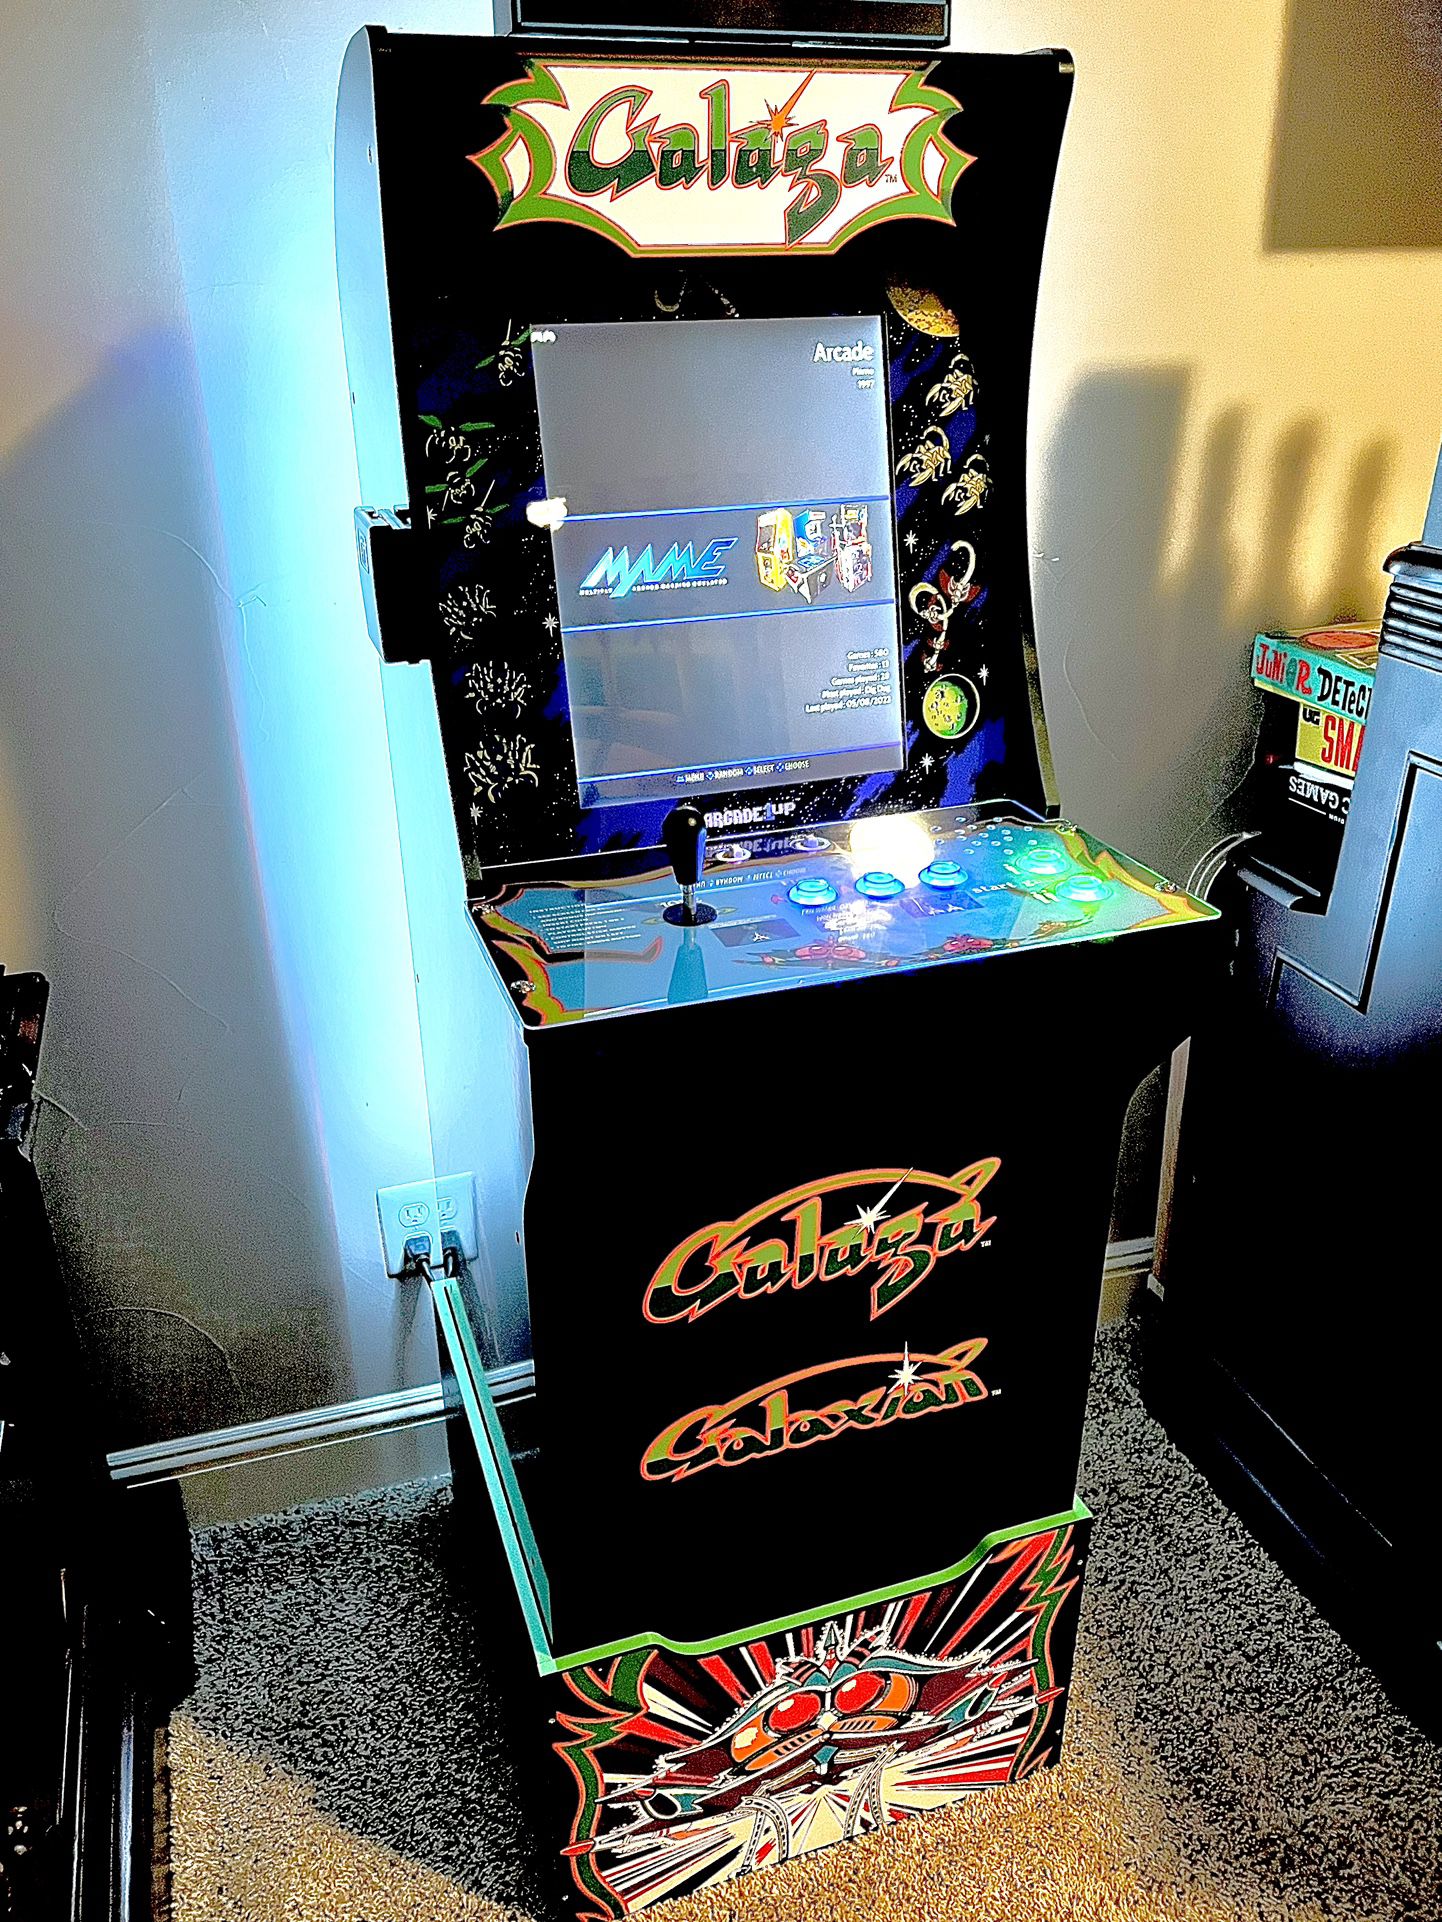 Arcade1up Mod New Arcade Galaga With 580 Vertical Games